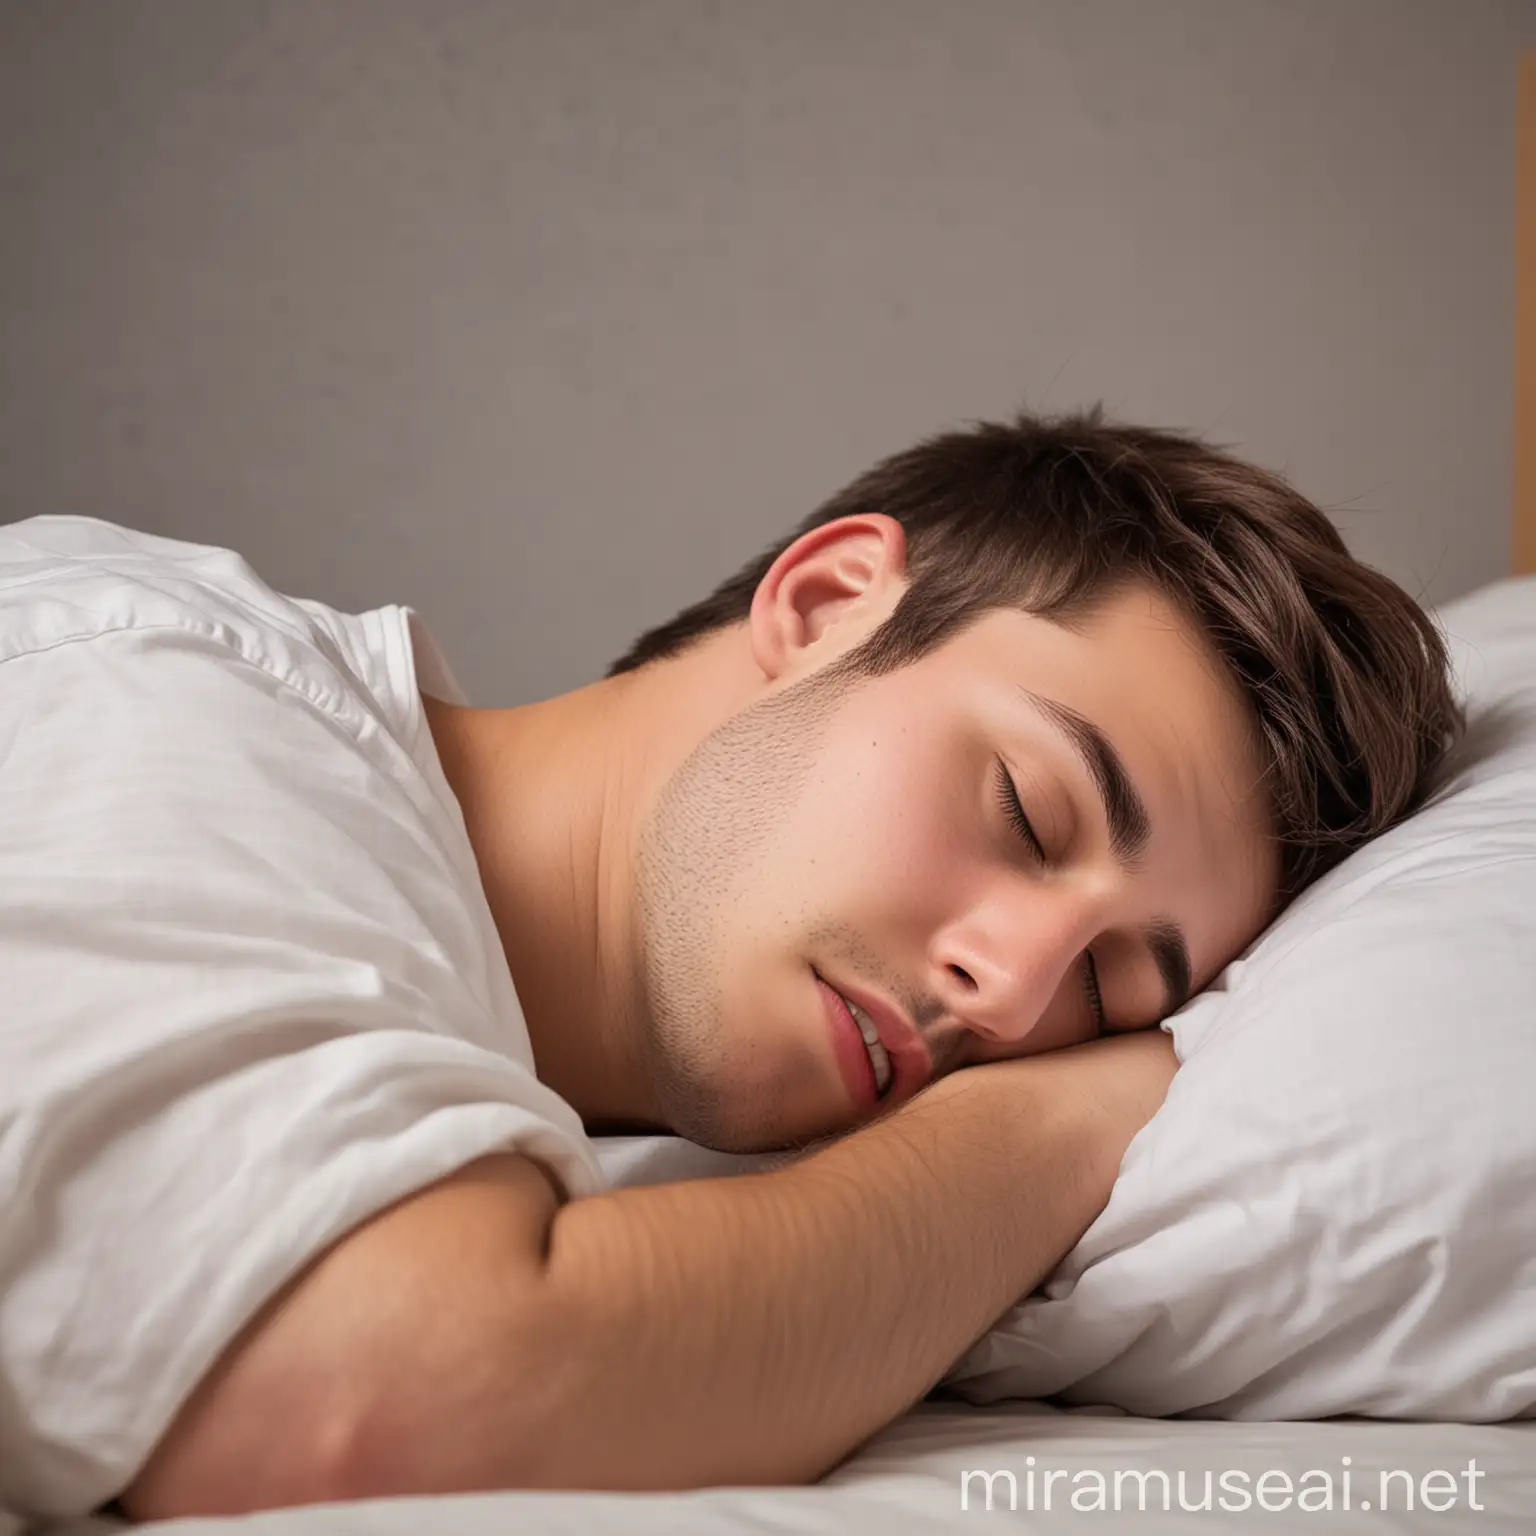 Restful Sleep Male College Student Relaxing in Peaceful Slumber